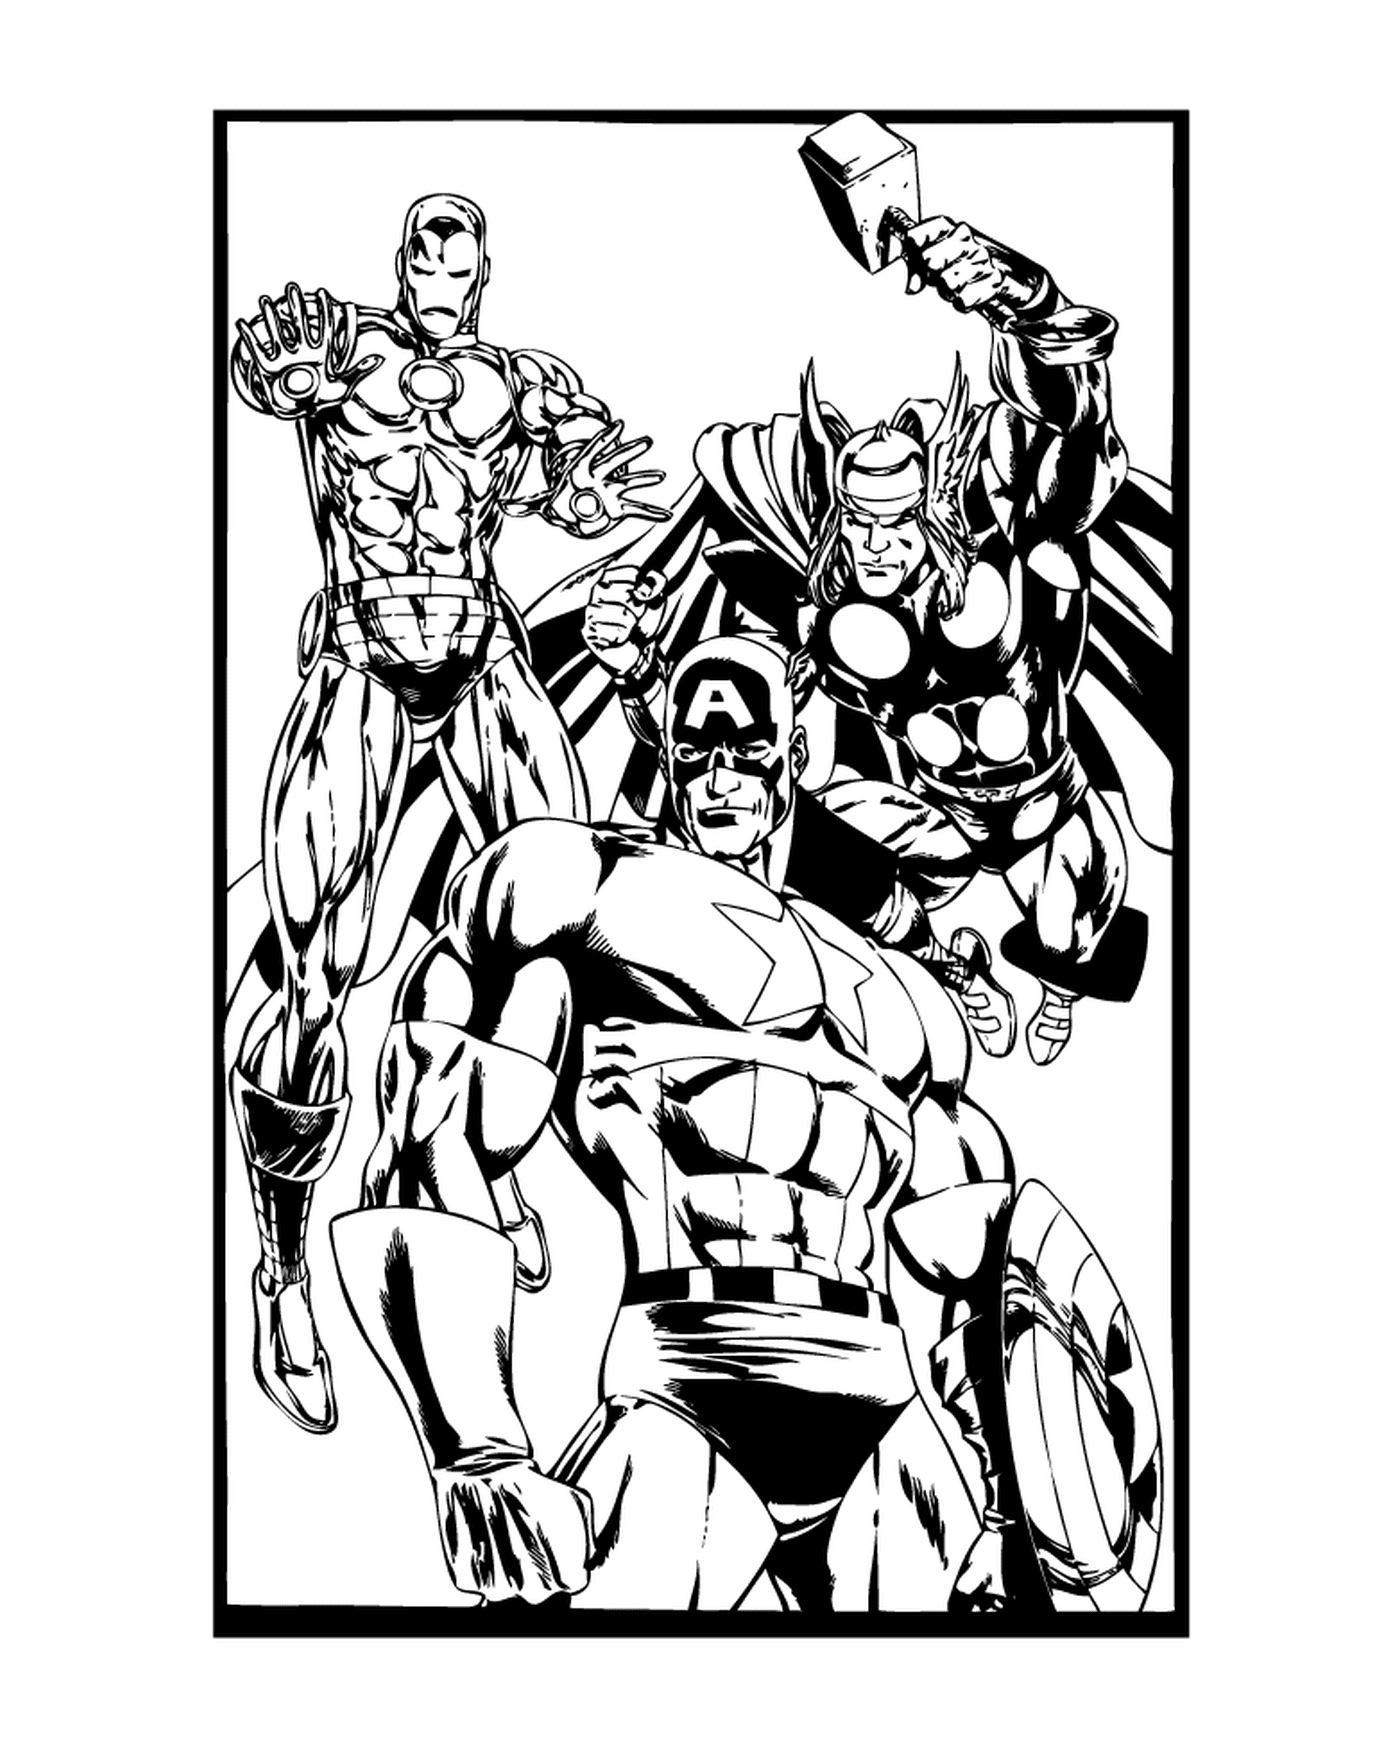  Три супергероя, Капитан Америка 221 